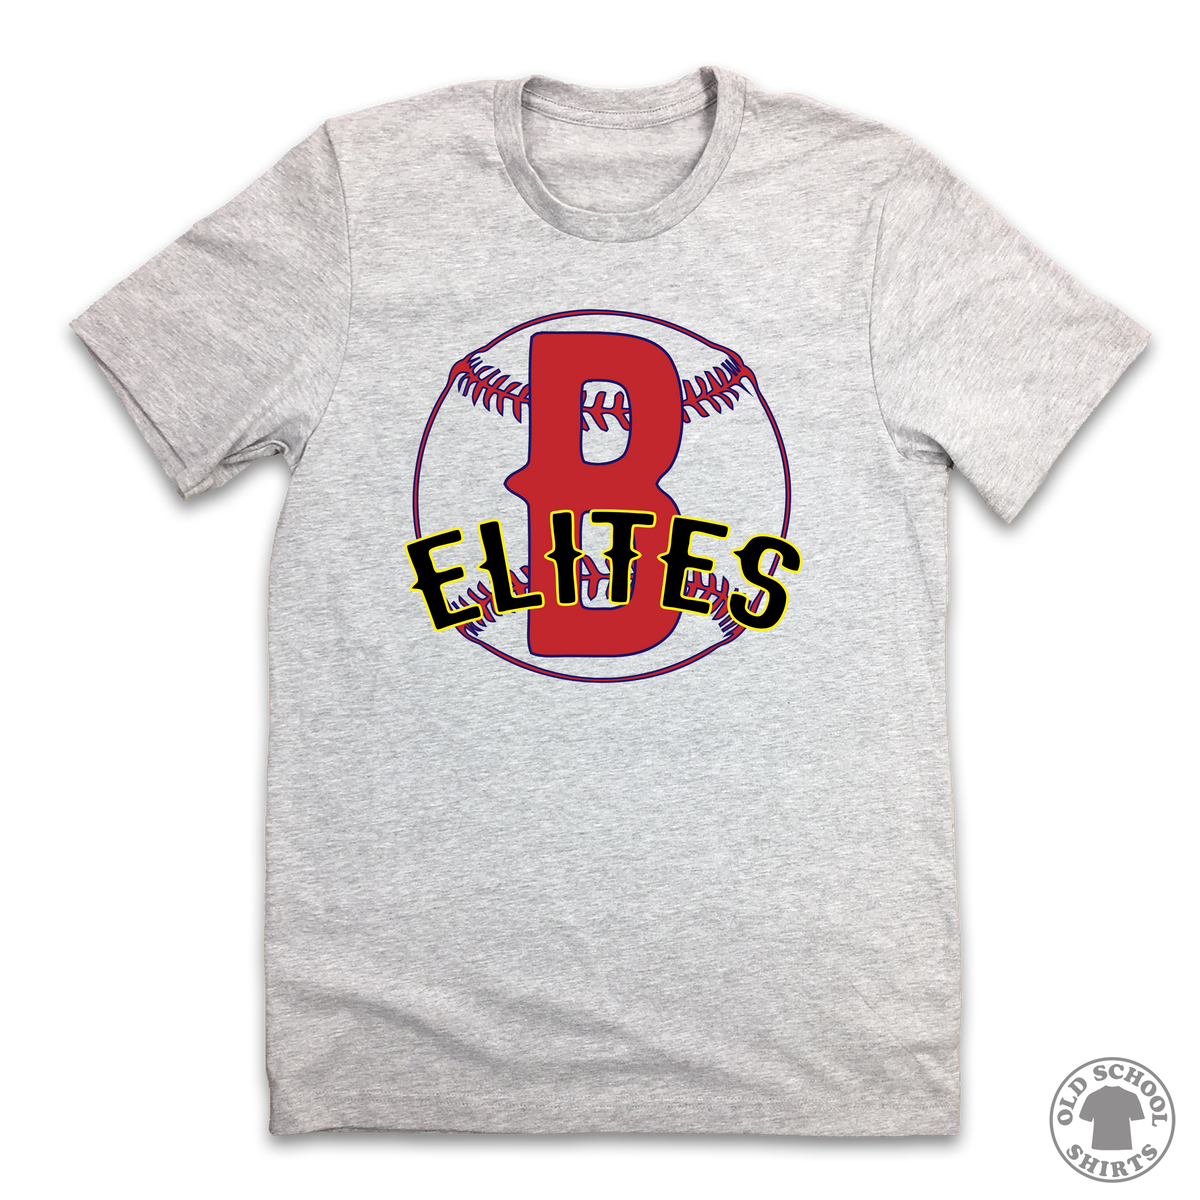 Baltimore Elite Giants - Old School Shirts- Retro Sports T Shirts